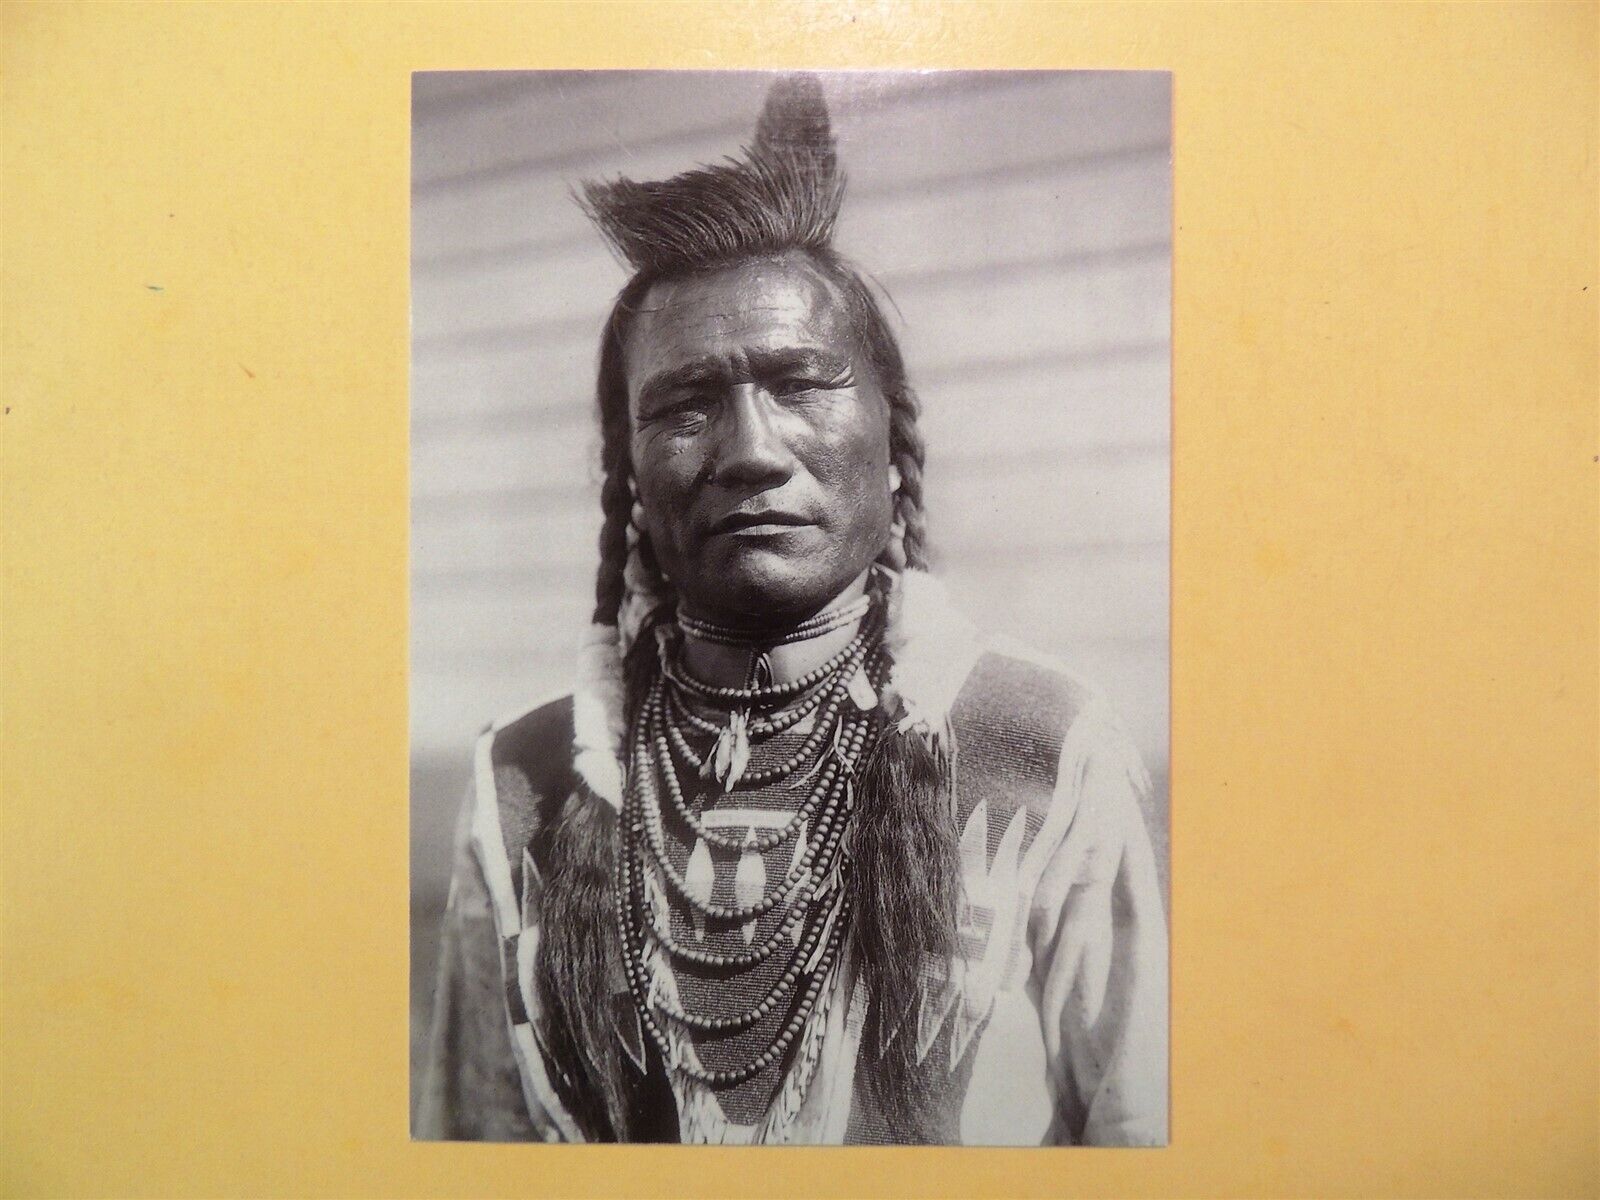 Bird Rattle Spokane tribesman vintage postcard 1910 photo by Edward Curtis